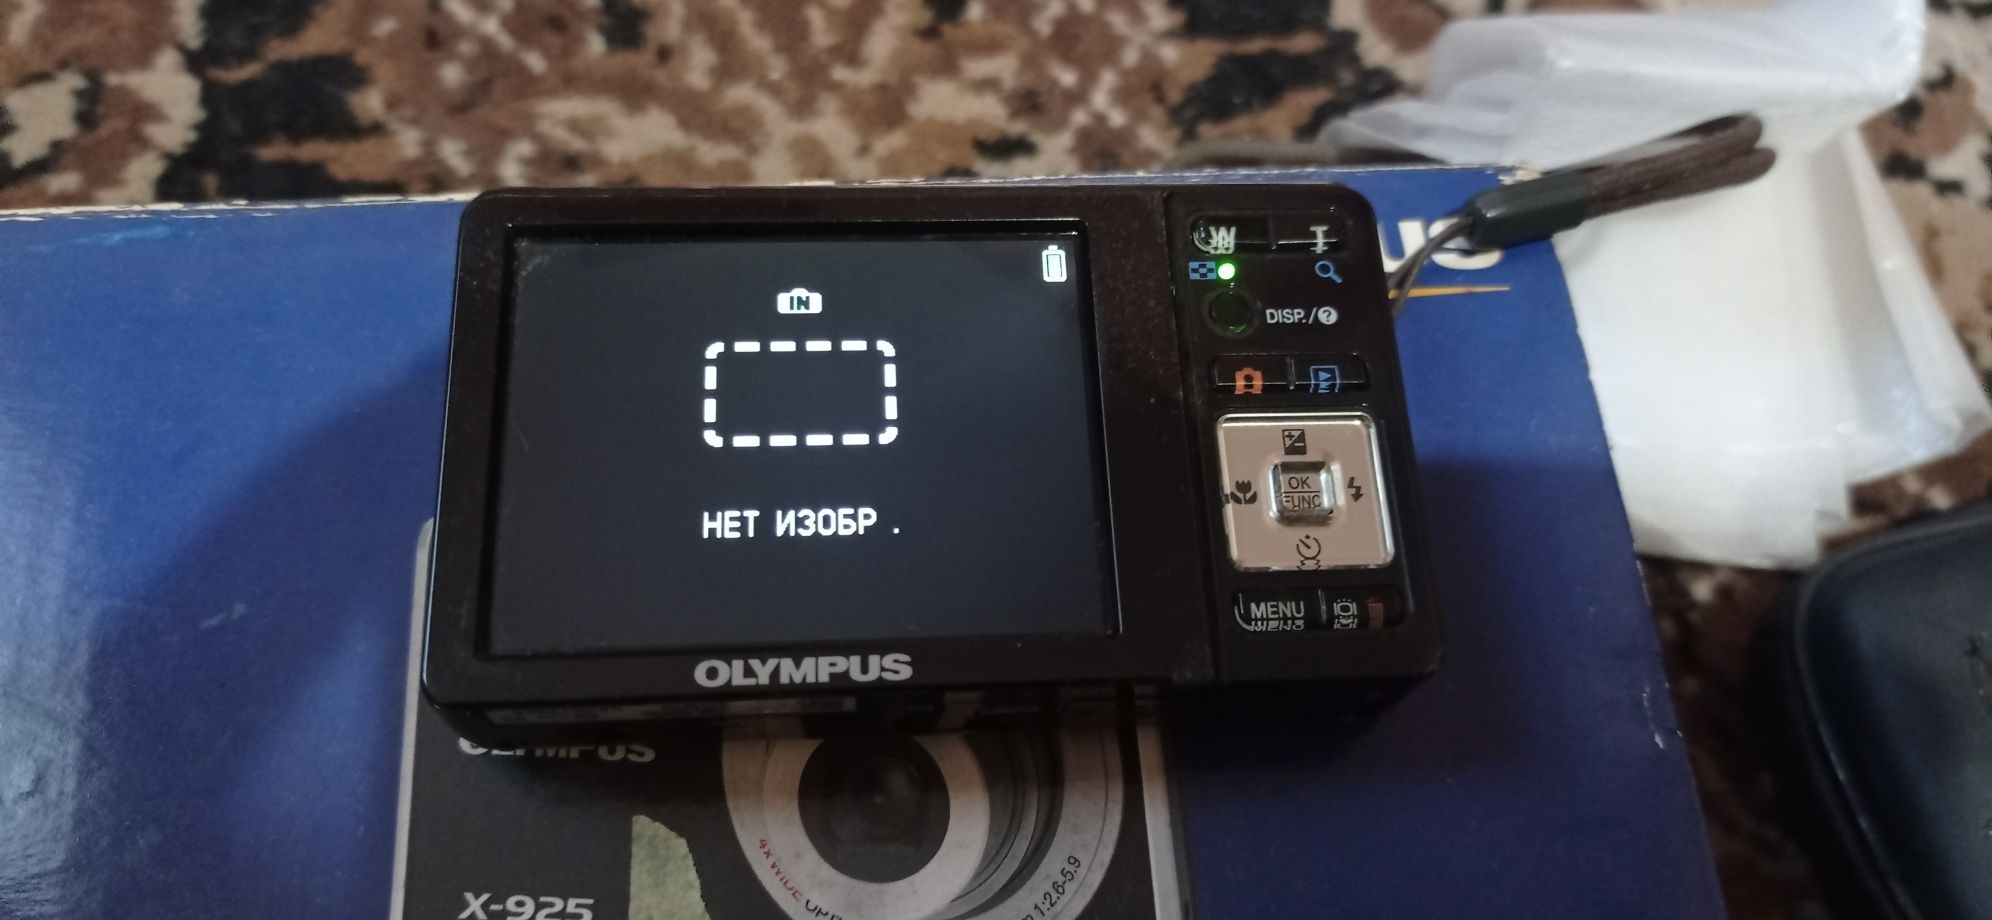 Цифровой фотоаппарат Olympus x-925